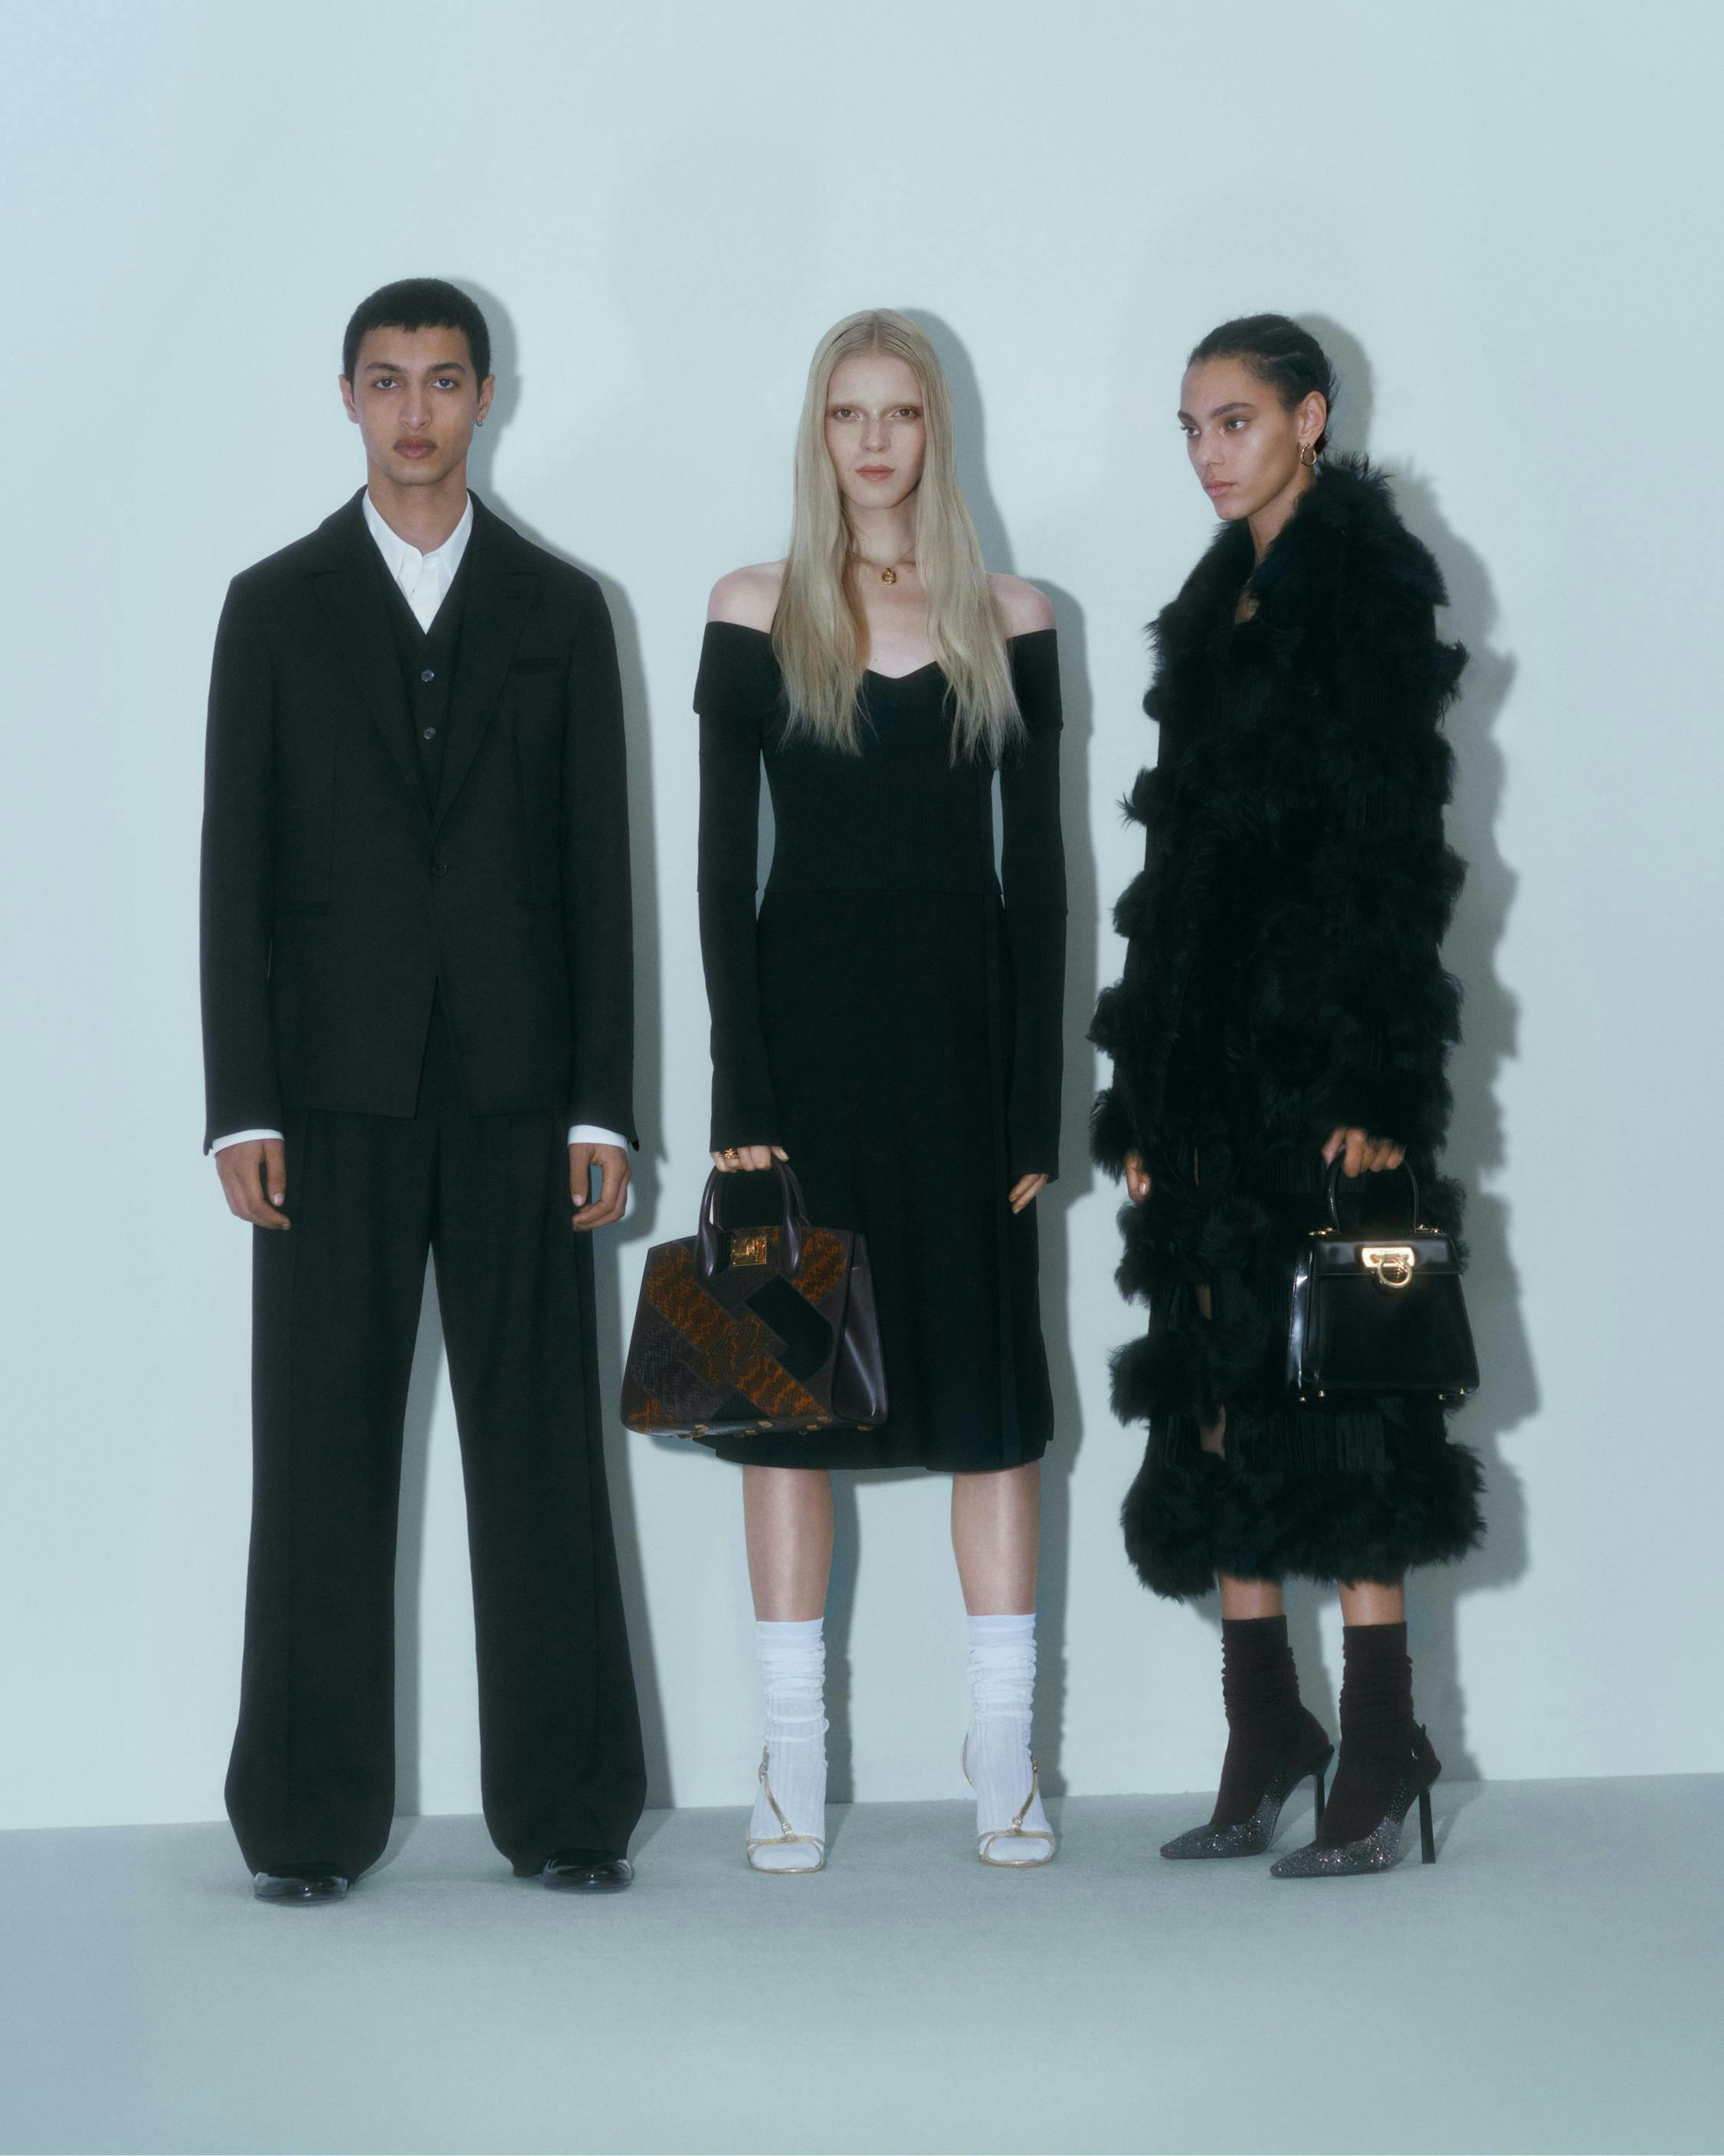 long sleeve coat handbag suit formal wear shoe high heel dress fashion person